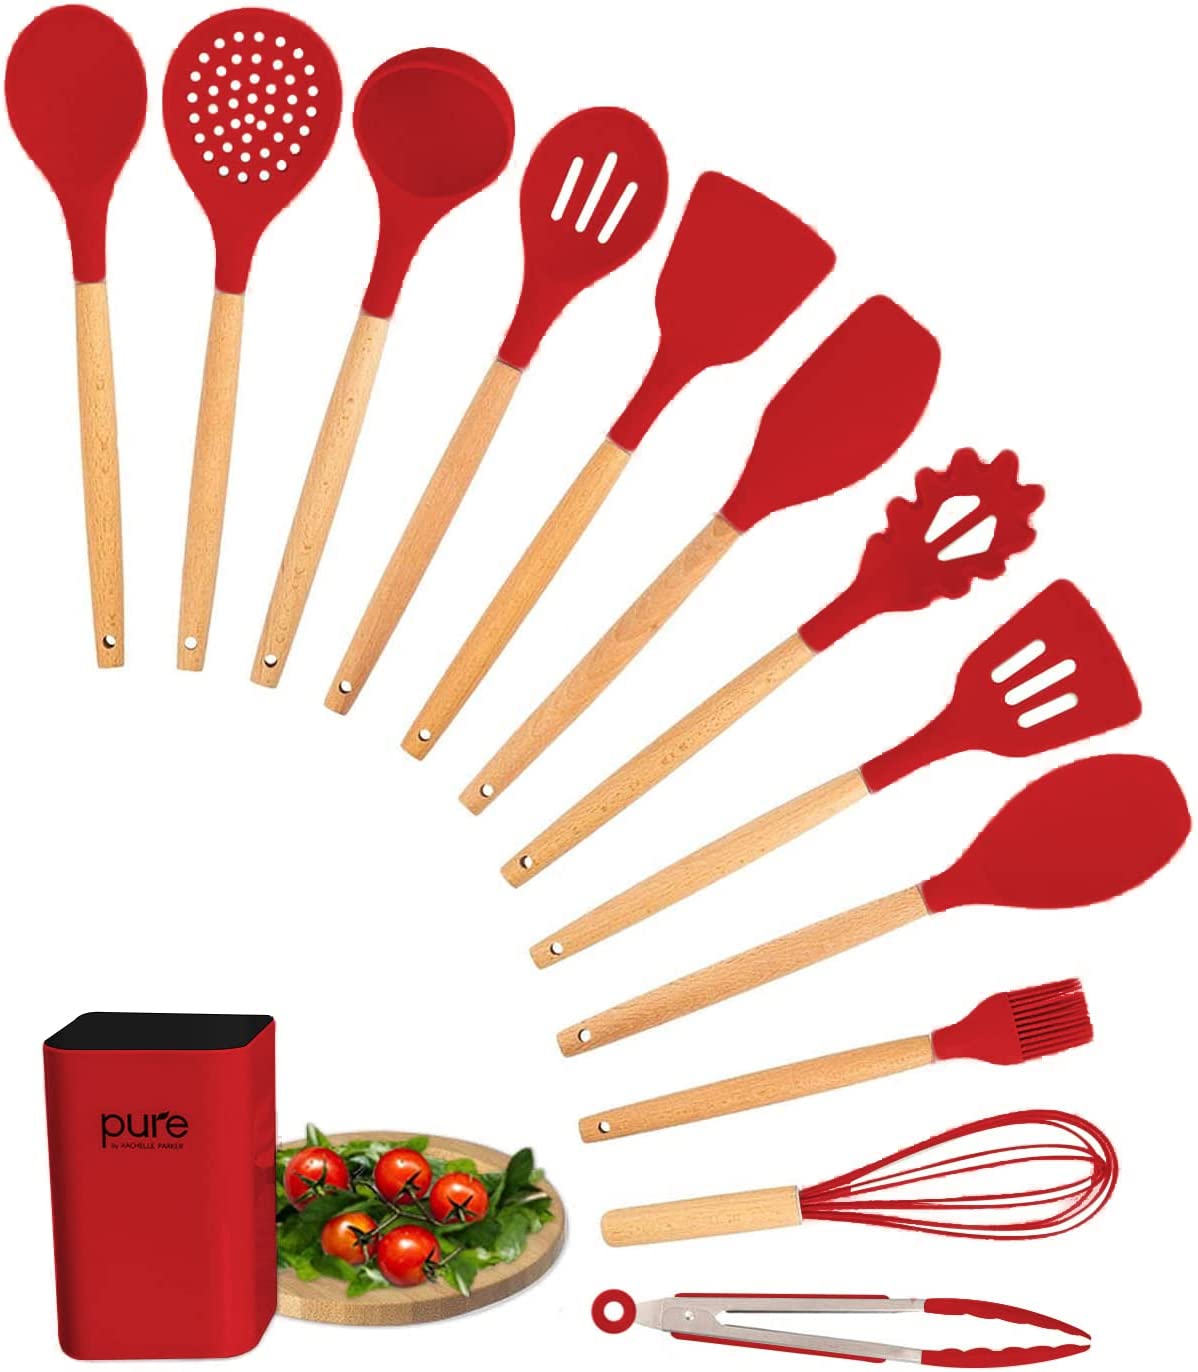 Premium Kitchen Utensils Set - Includes Ladle, Spoon, Slotted